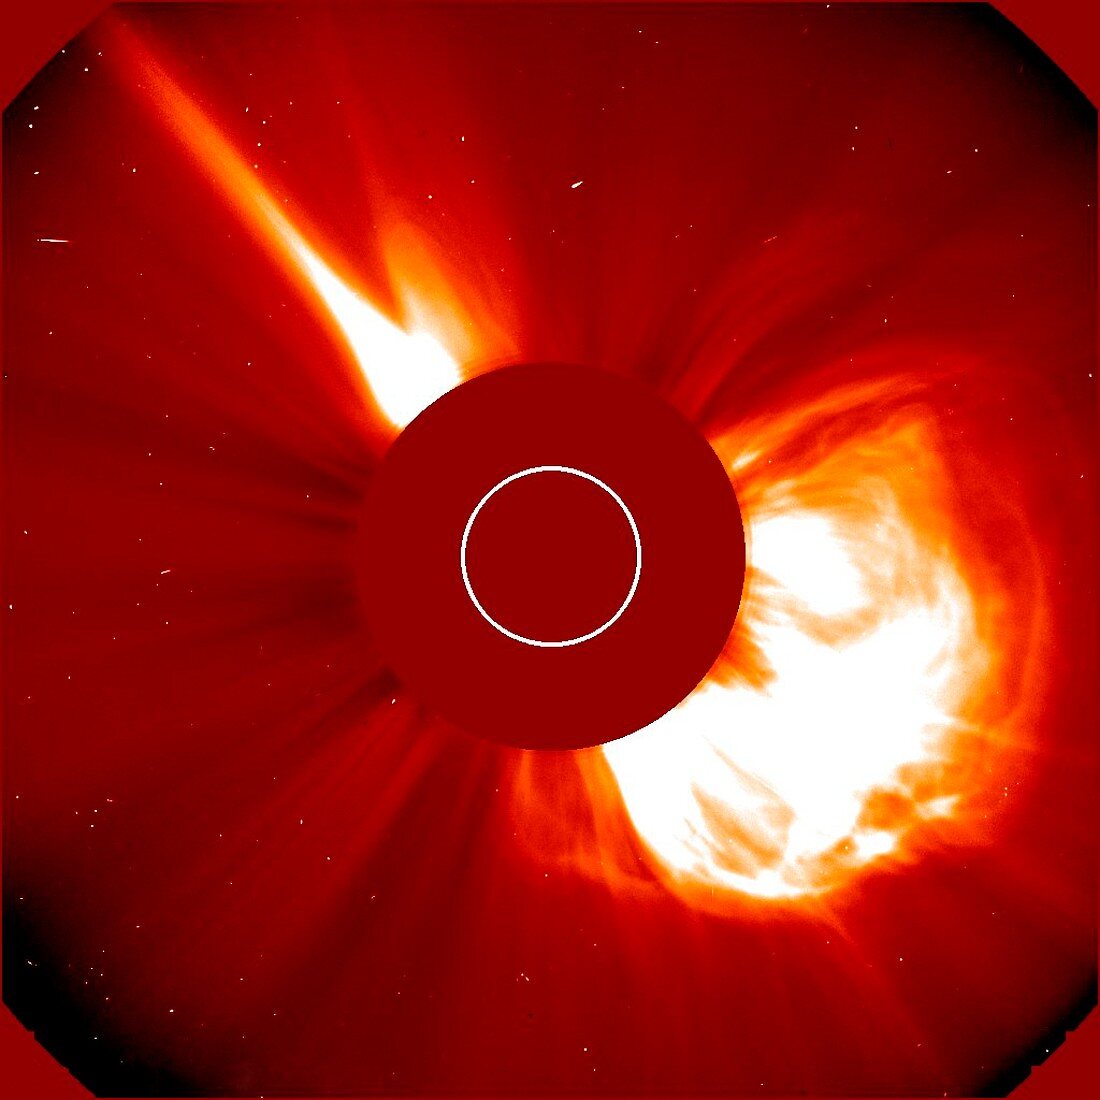 Giant solar flare,satellite image